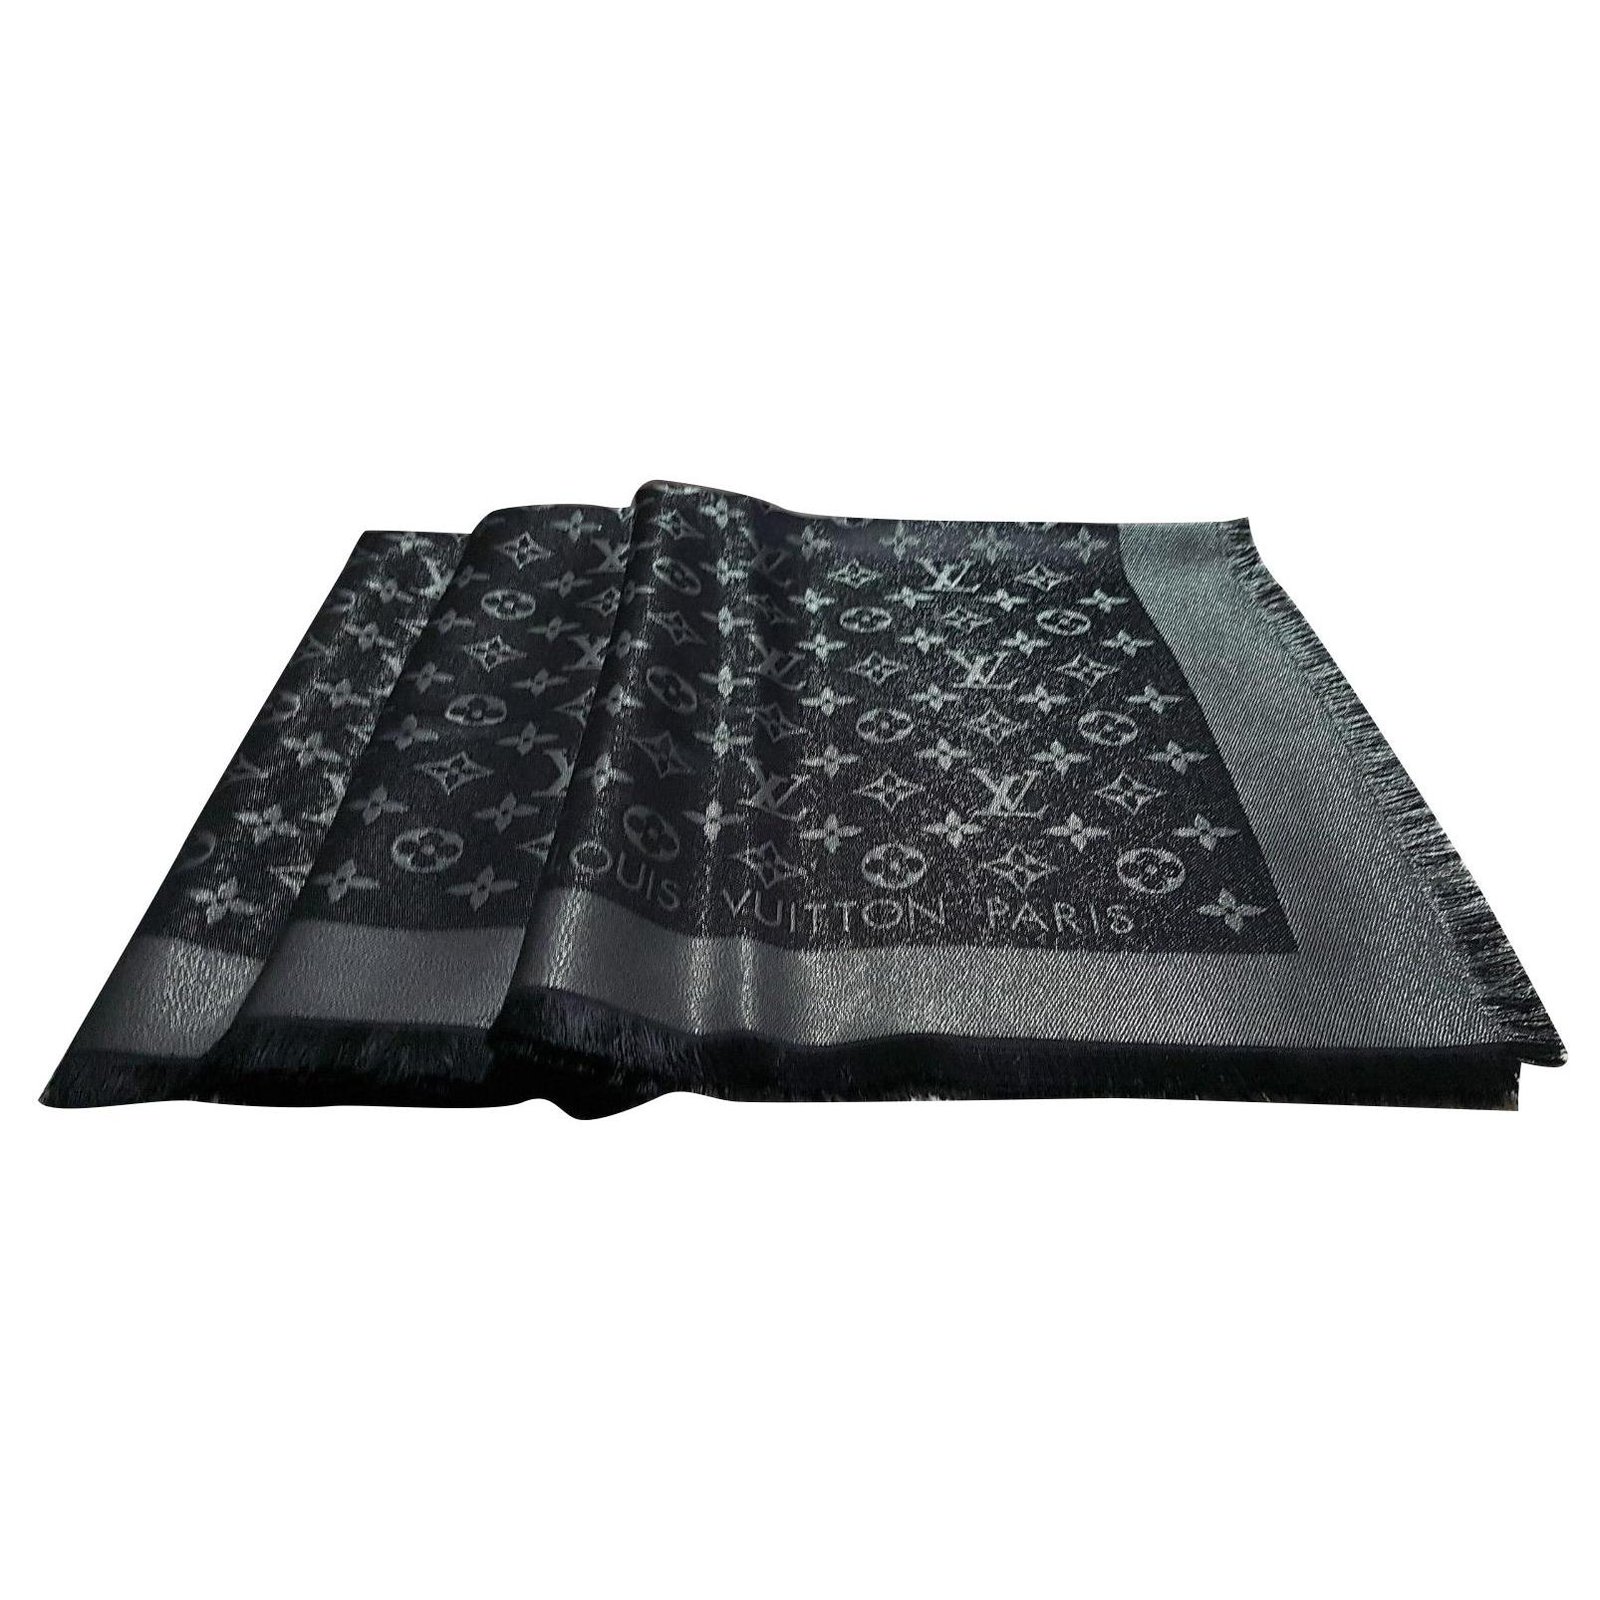 Louis Vuitton Mahina Flight Mode Scarf Black in Cashmere Wool - US